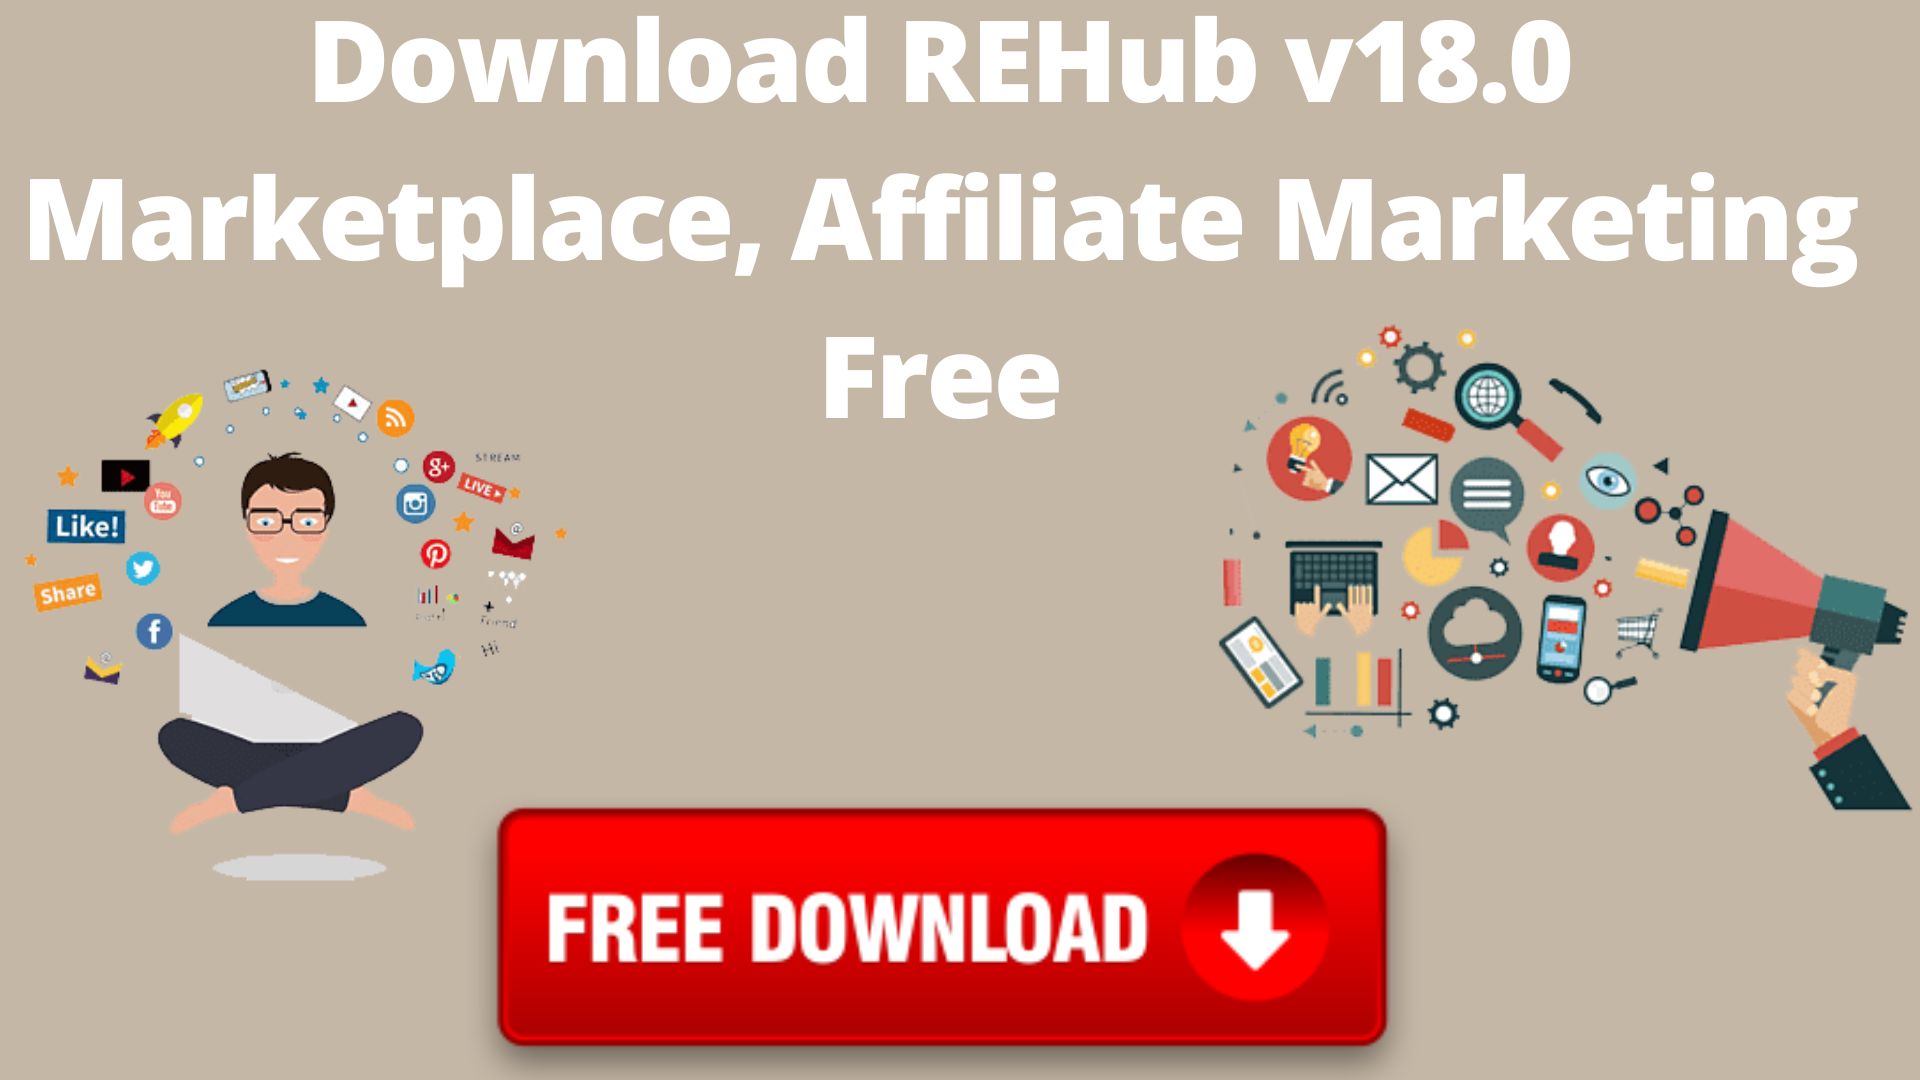 Download rehub v18. 0 marketplace, affiliate marketing free